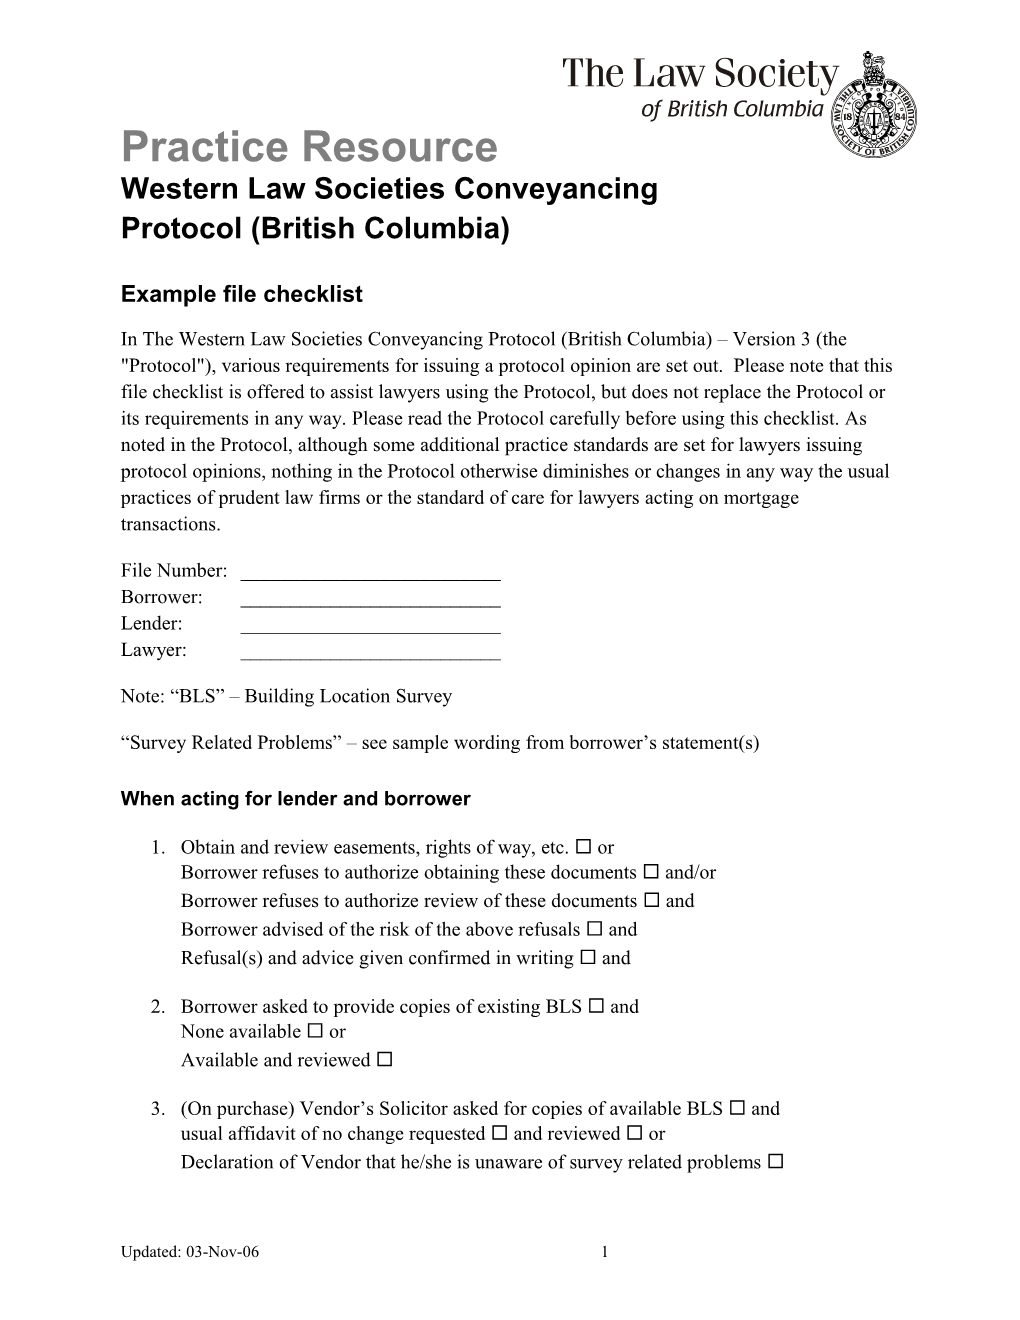 Practice Resource: Western Law Societies Conveyancing Protocol (British Columbia)